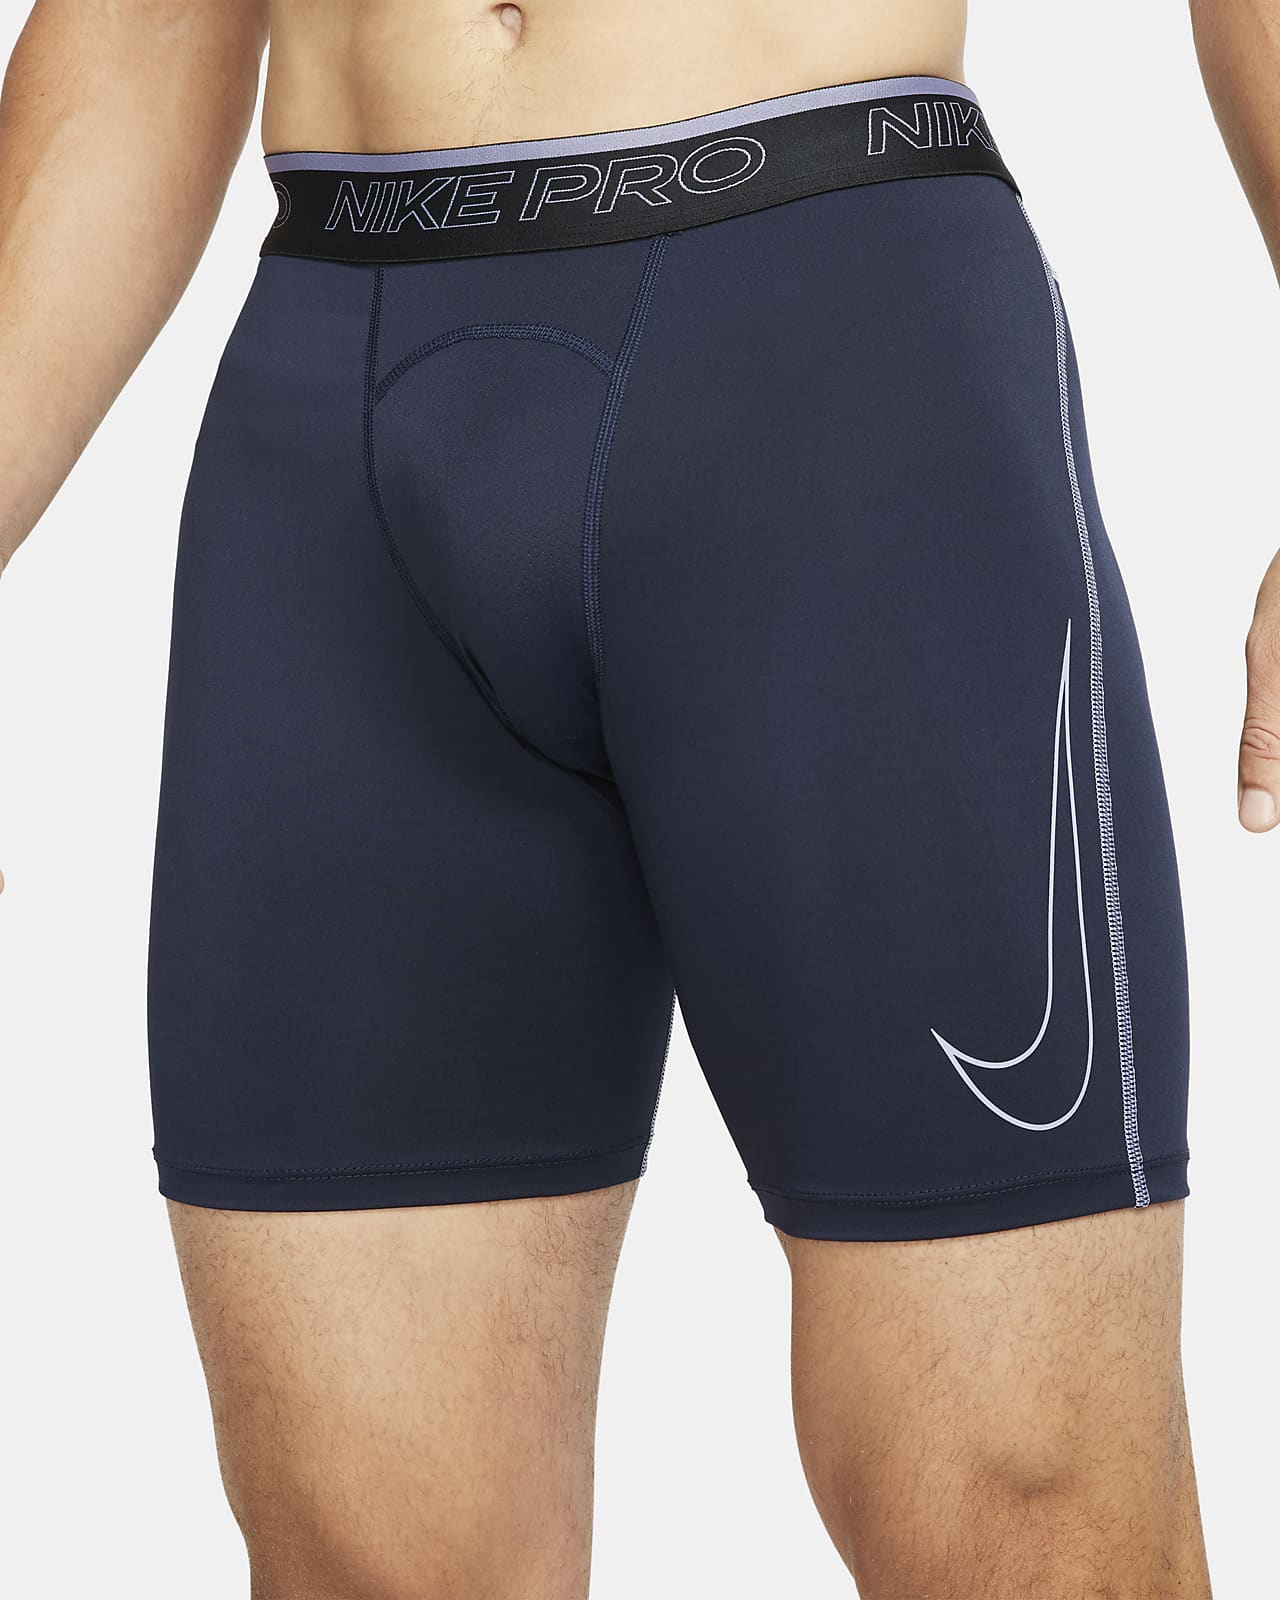 Mens Underwear Boxer Briefs Compression Shorts High Elastic Pouch Quick Dry Fit